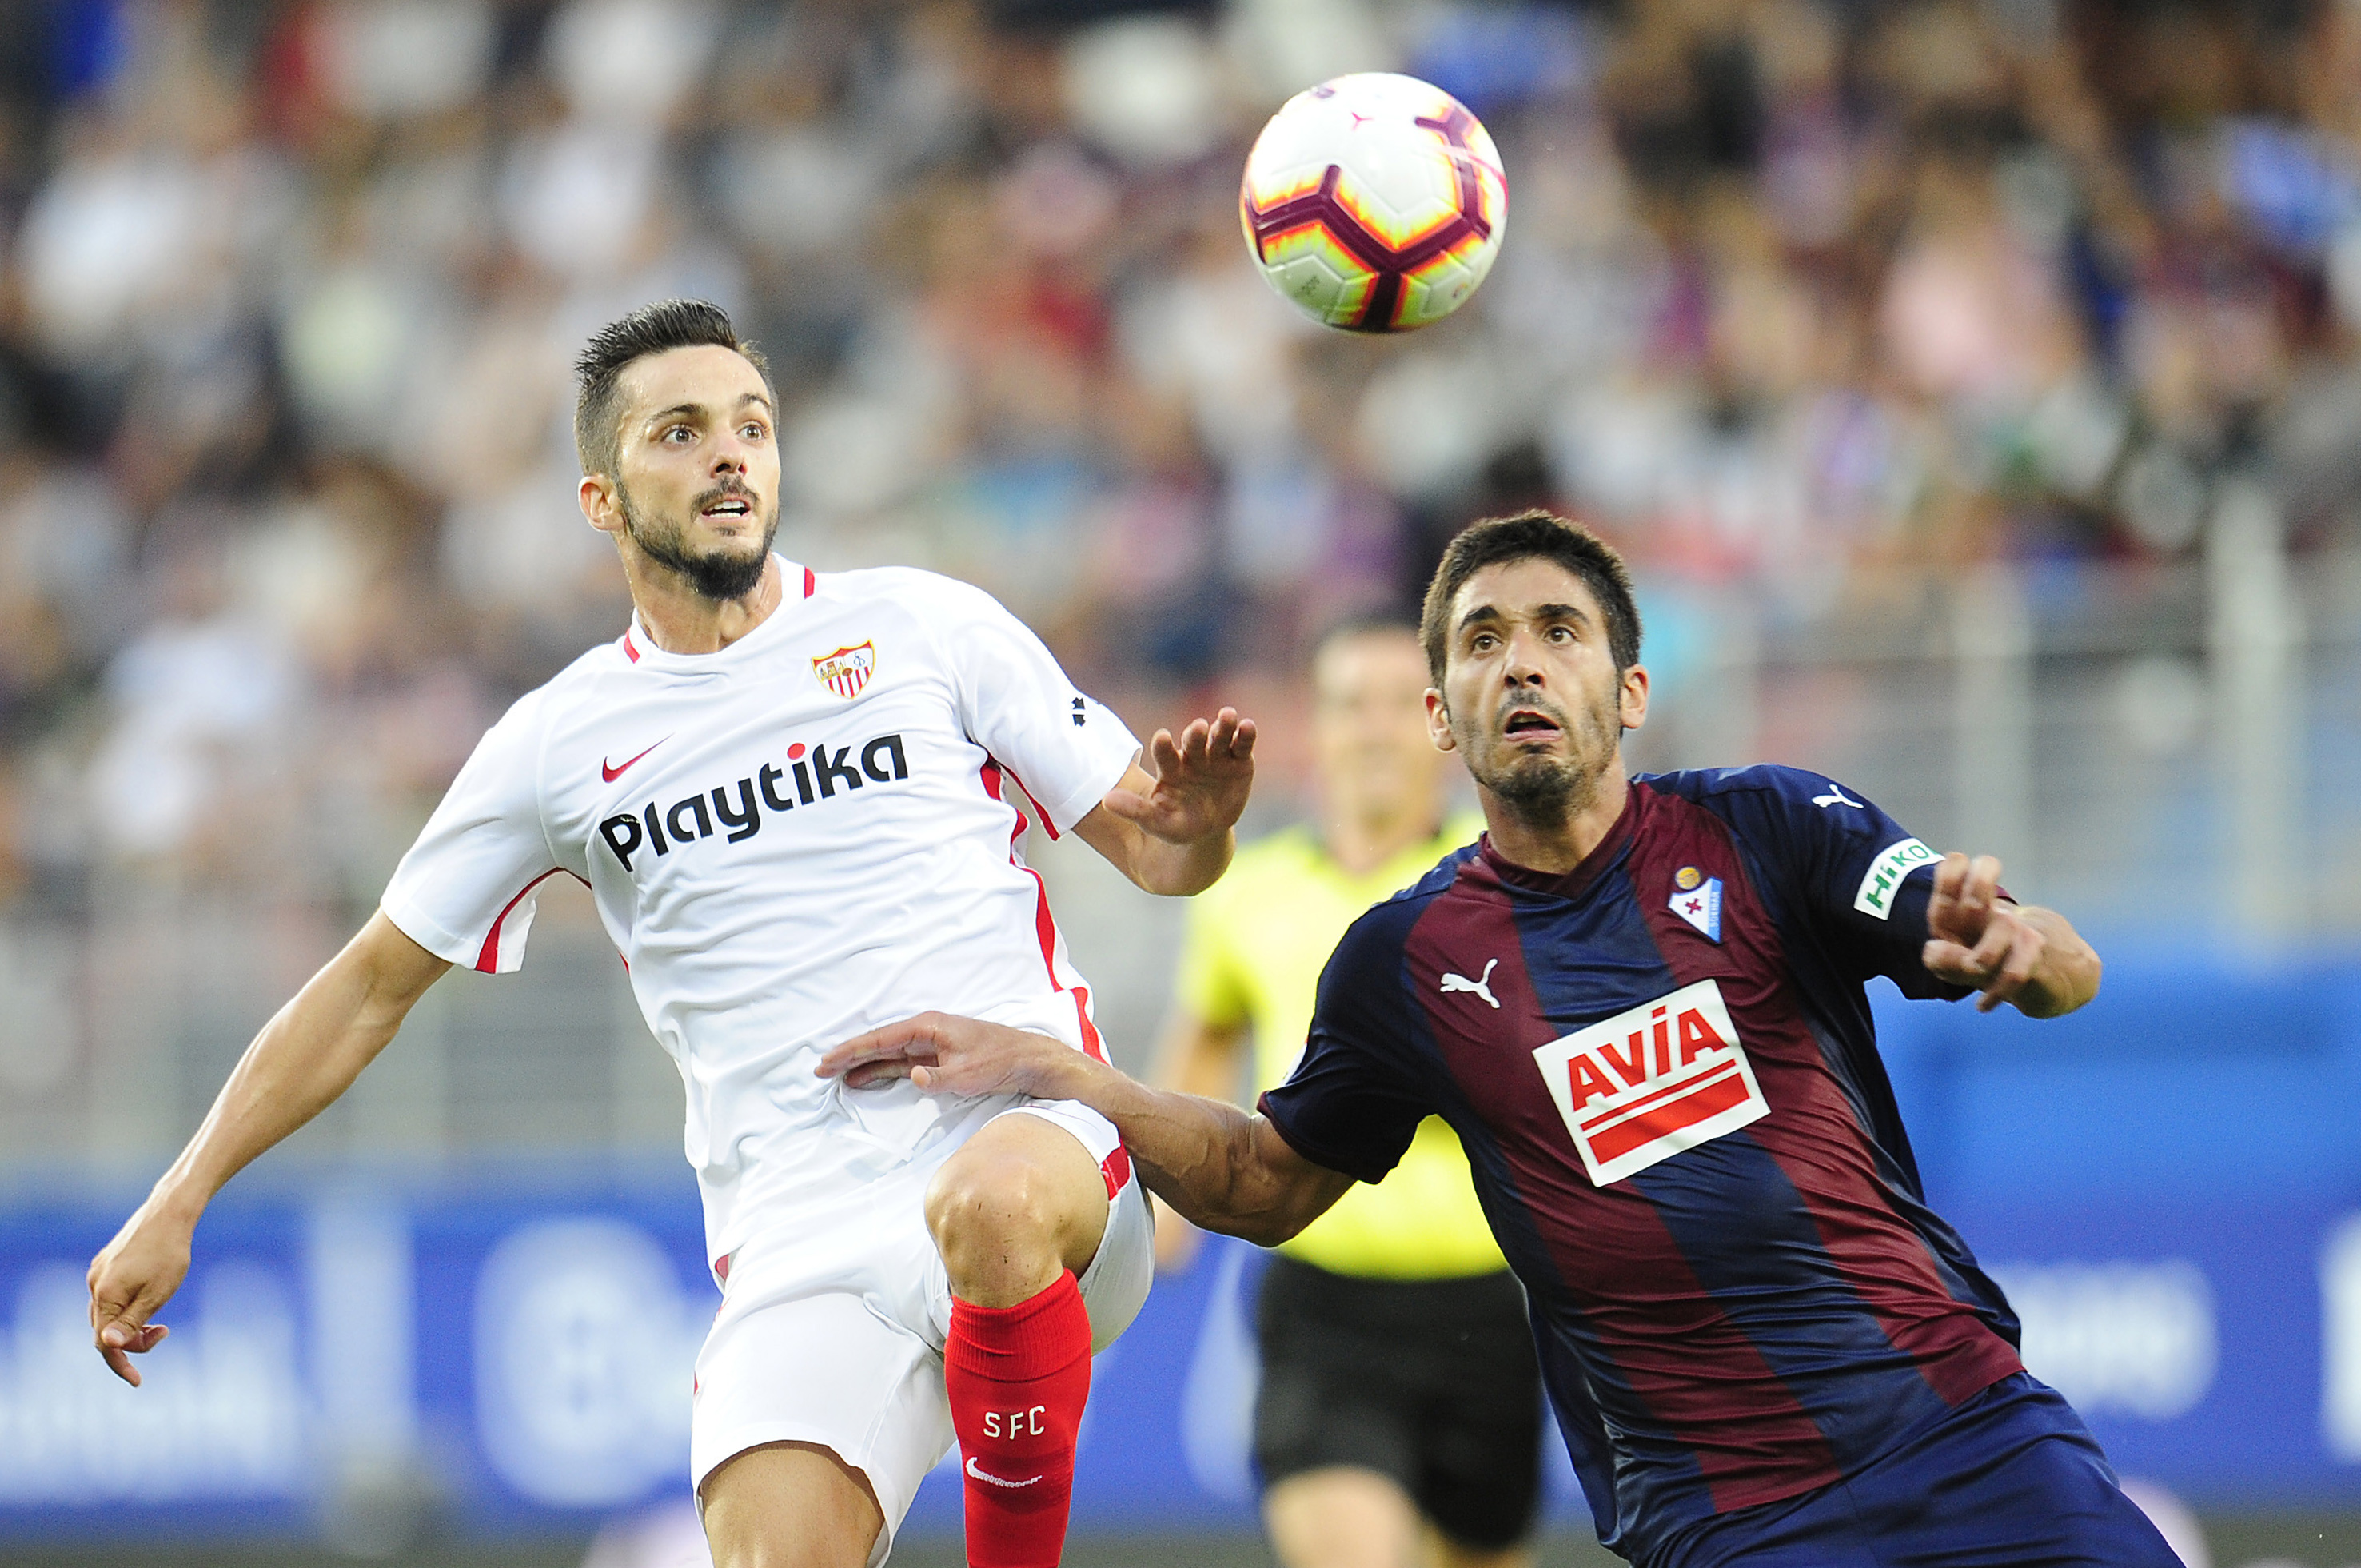 Sarabia of Sevilla FC against SD Eibar